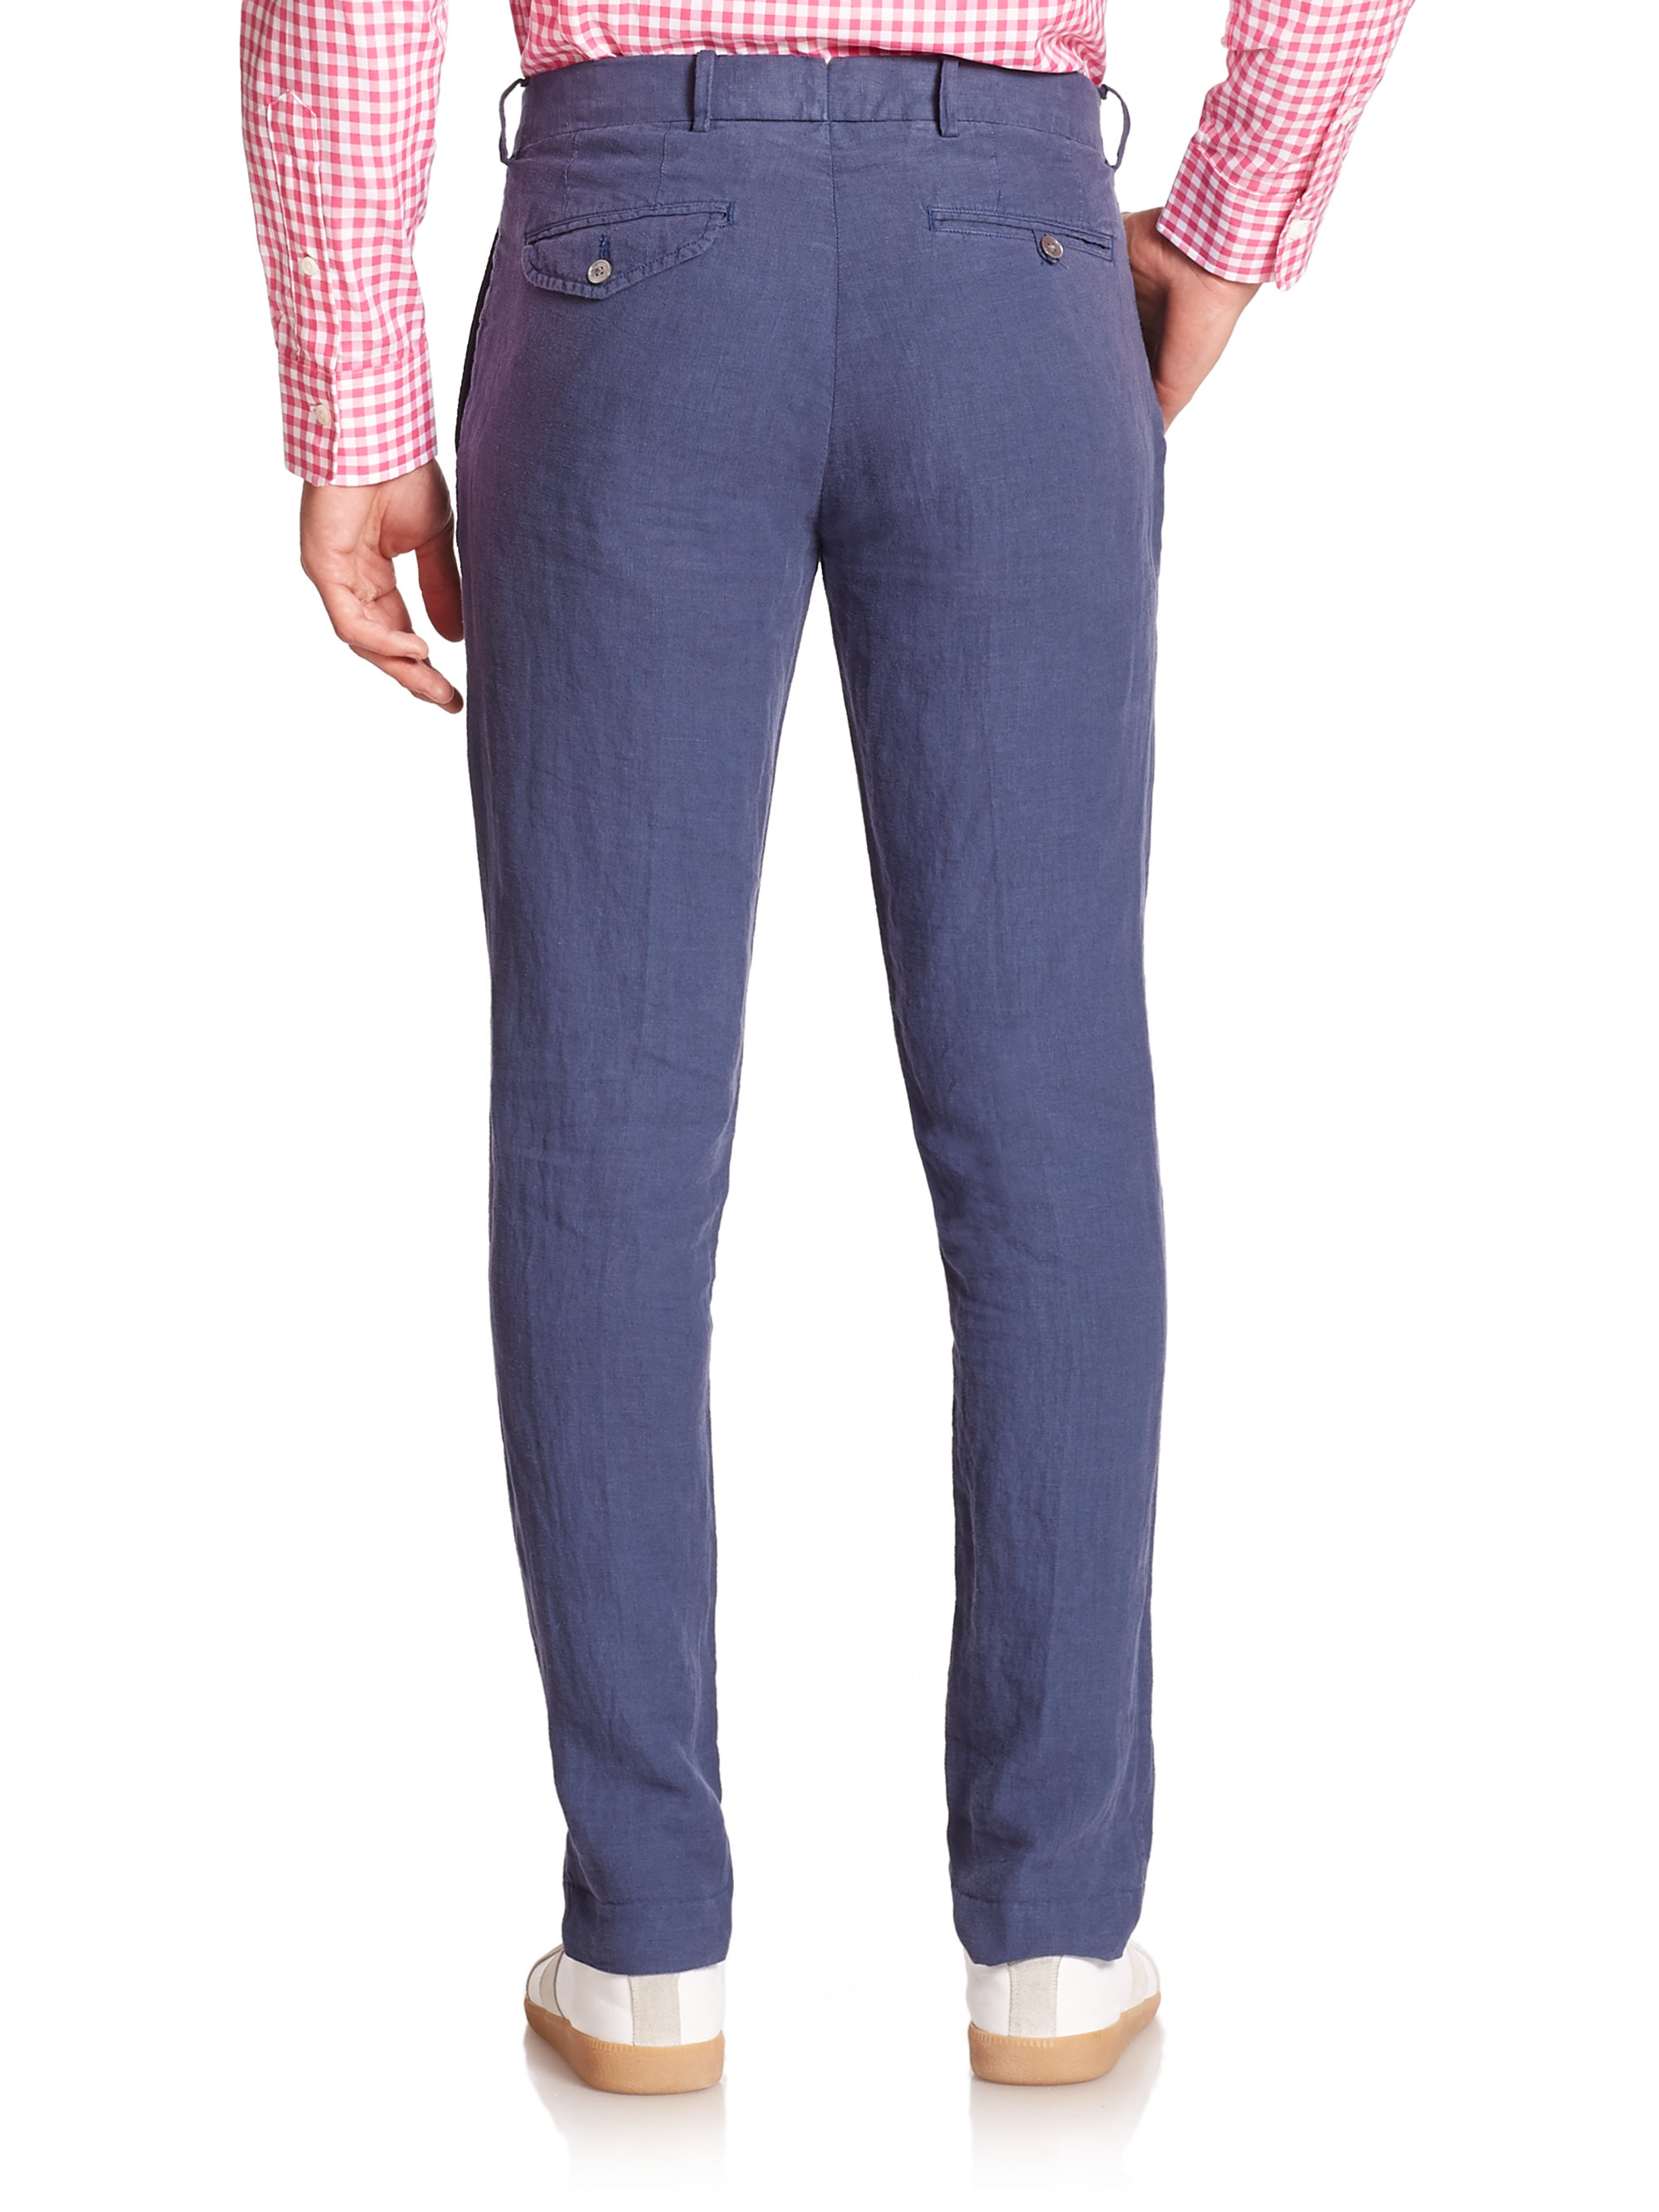 Lyst - Polo Ralph Lauren Straight-fit Briton Linen Pants in Blue for Men